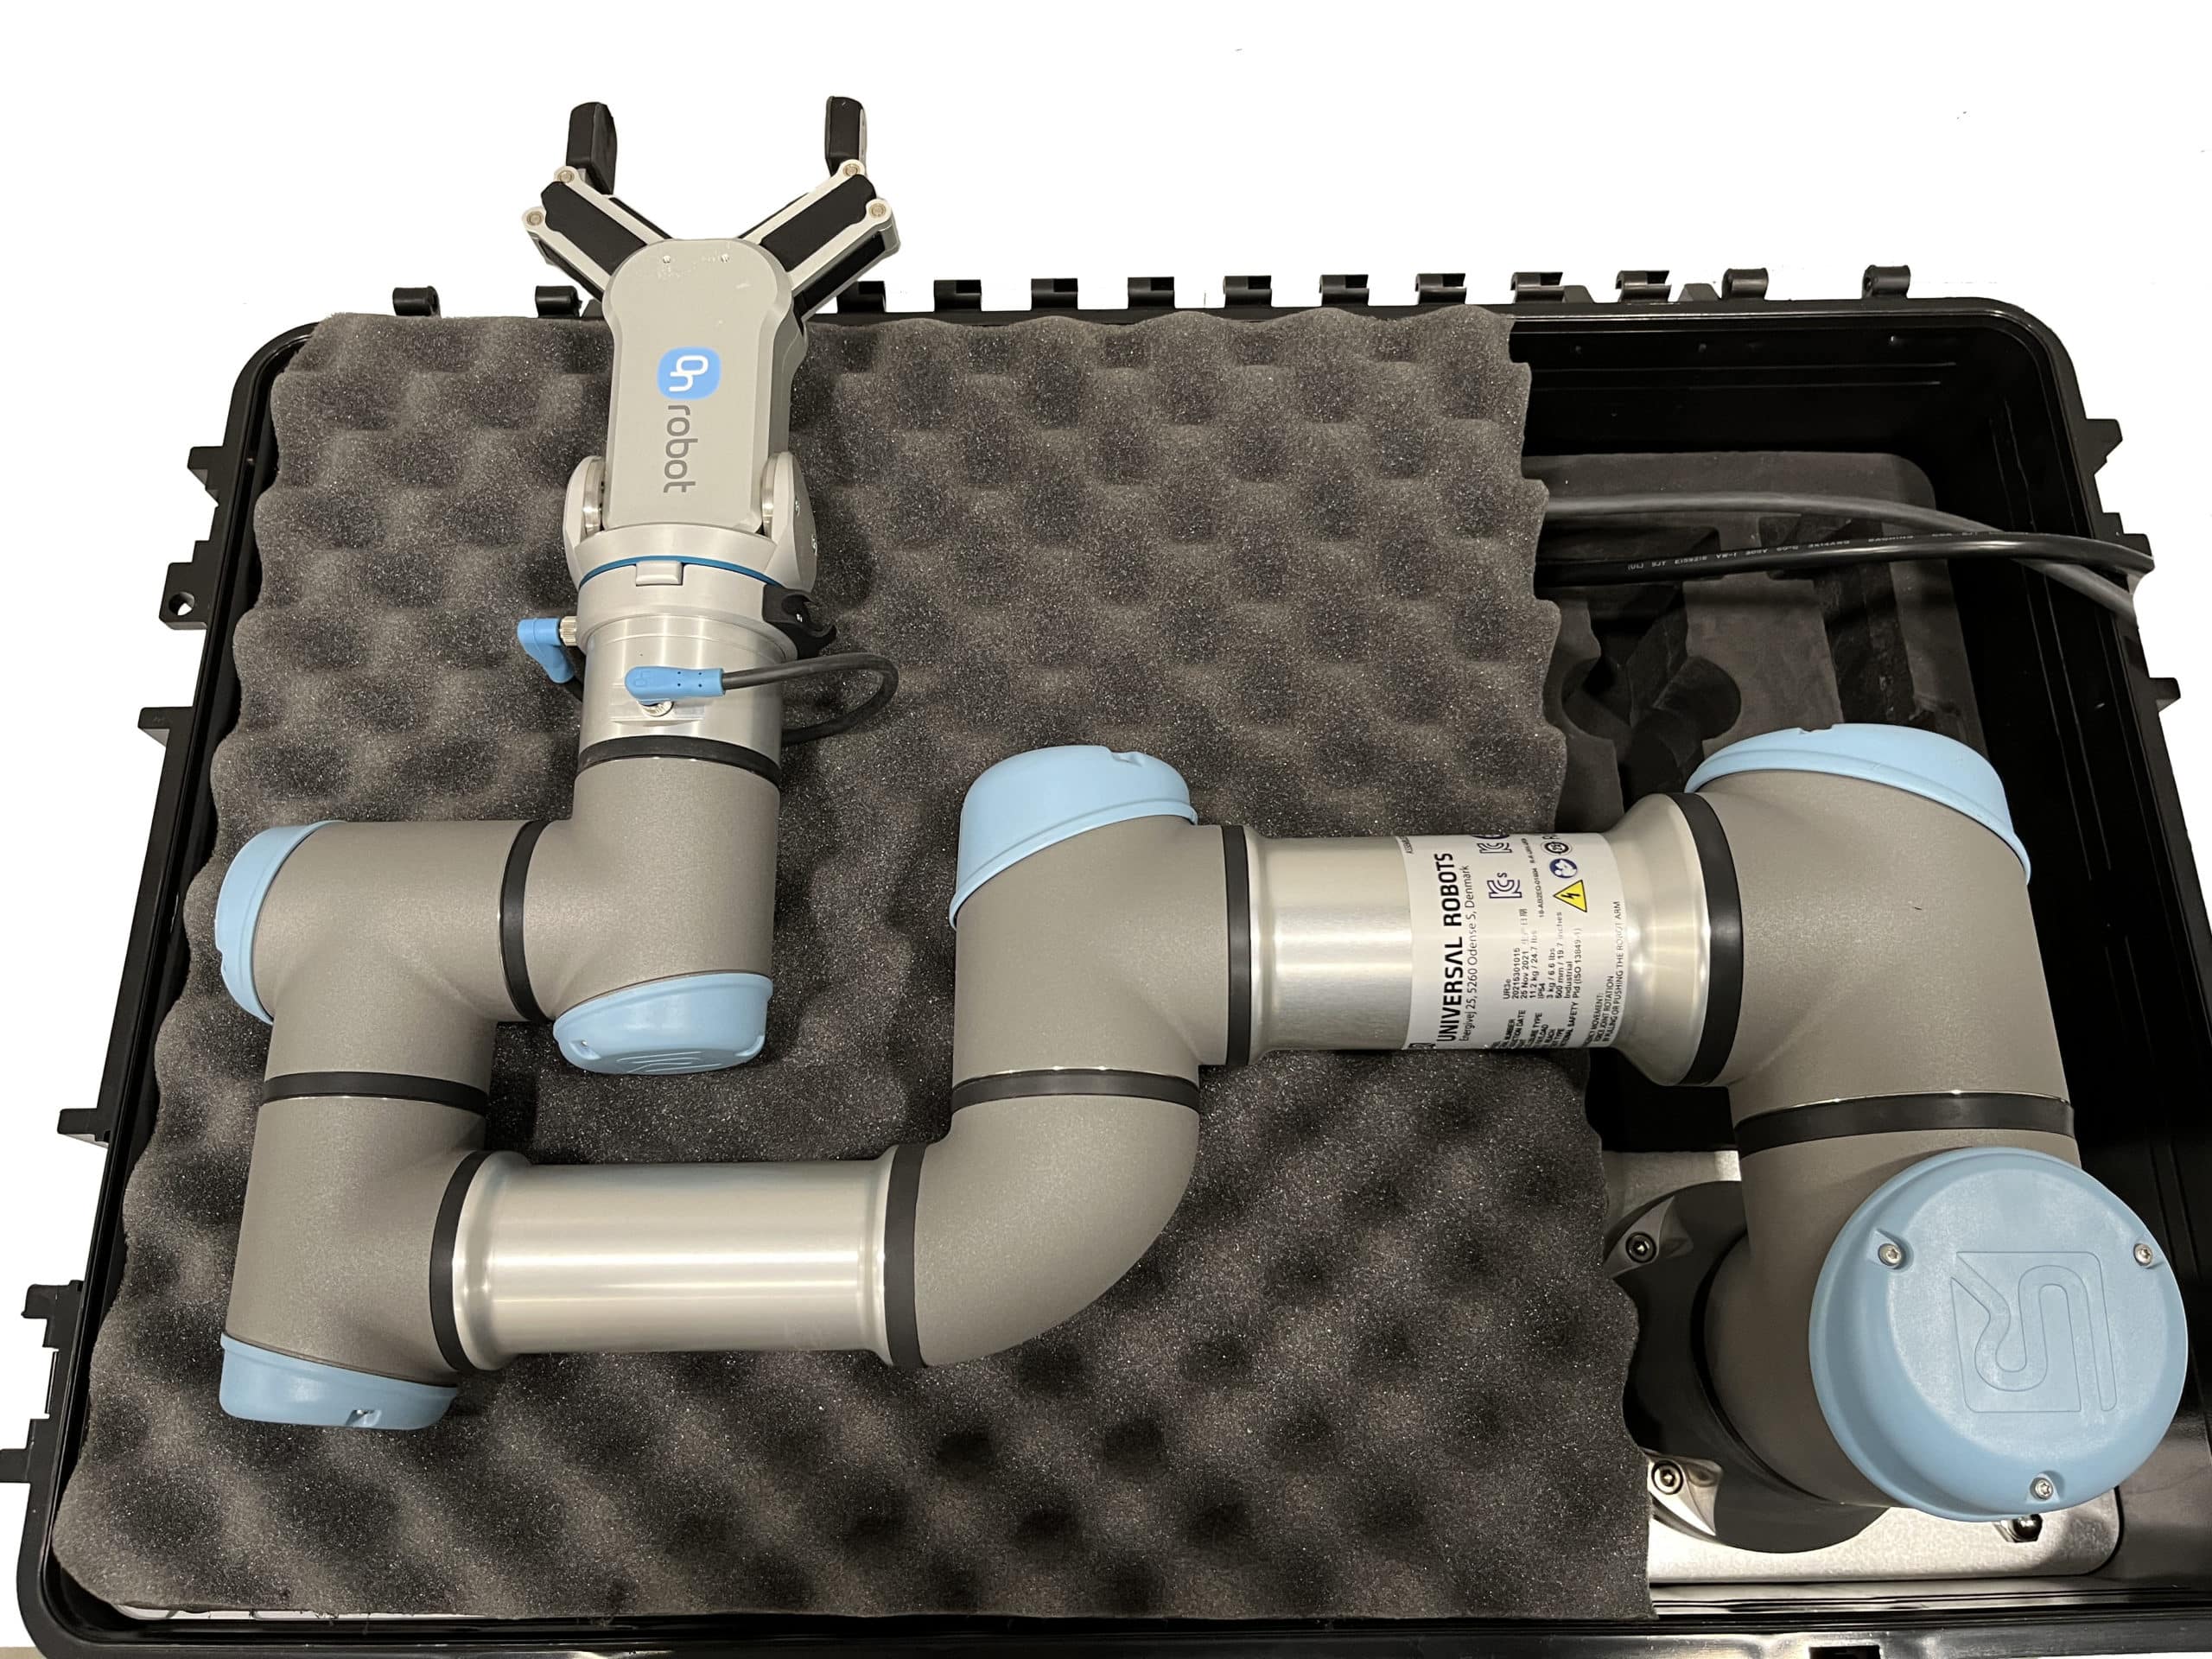 SMC Suitcase Robot Training System TOOLKIT TECH